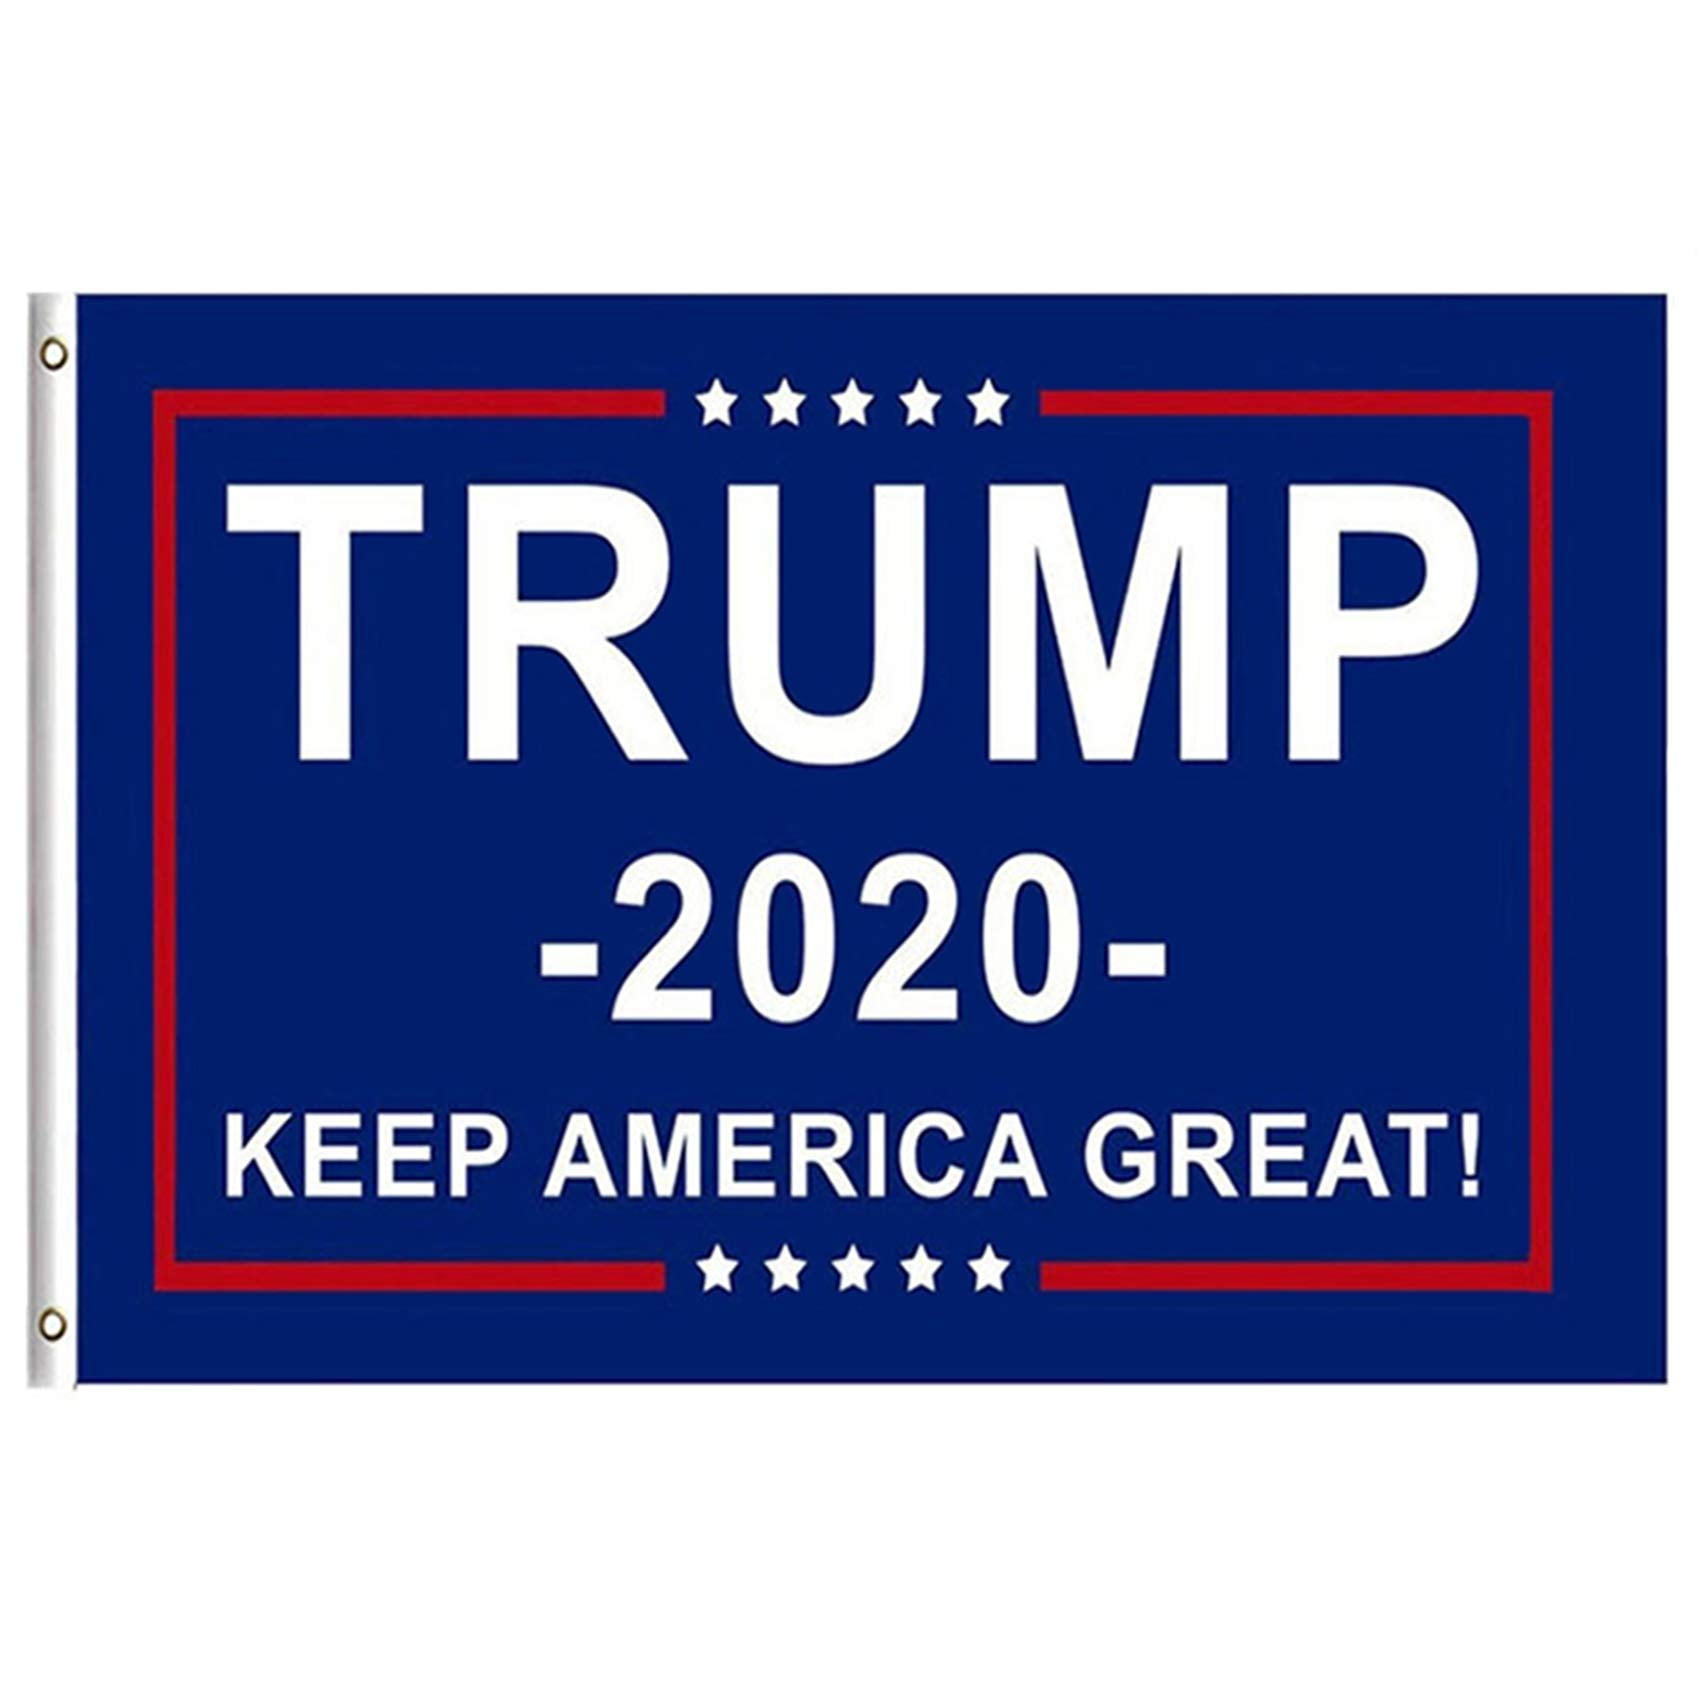 DONALD TRUMP 2020 MAGA NO MORE BULLSHIT 3' x 5' Flag Banner